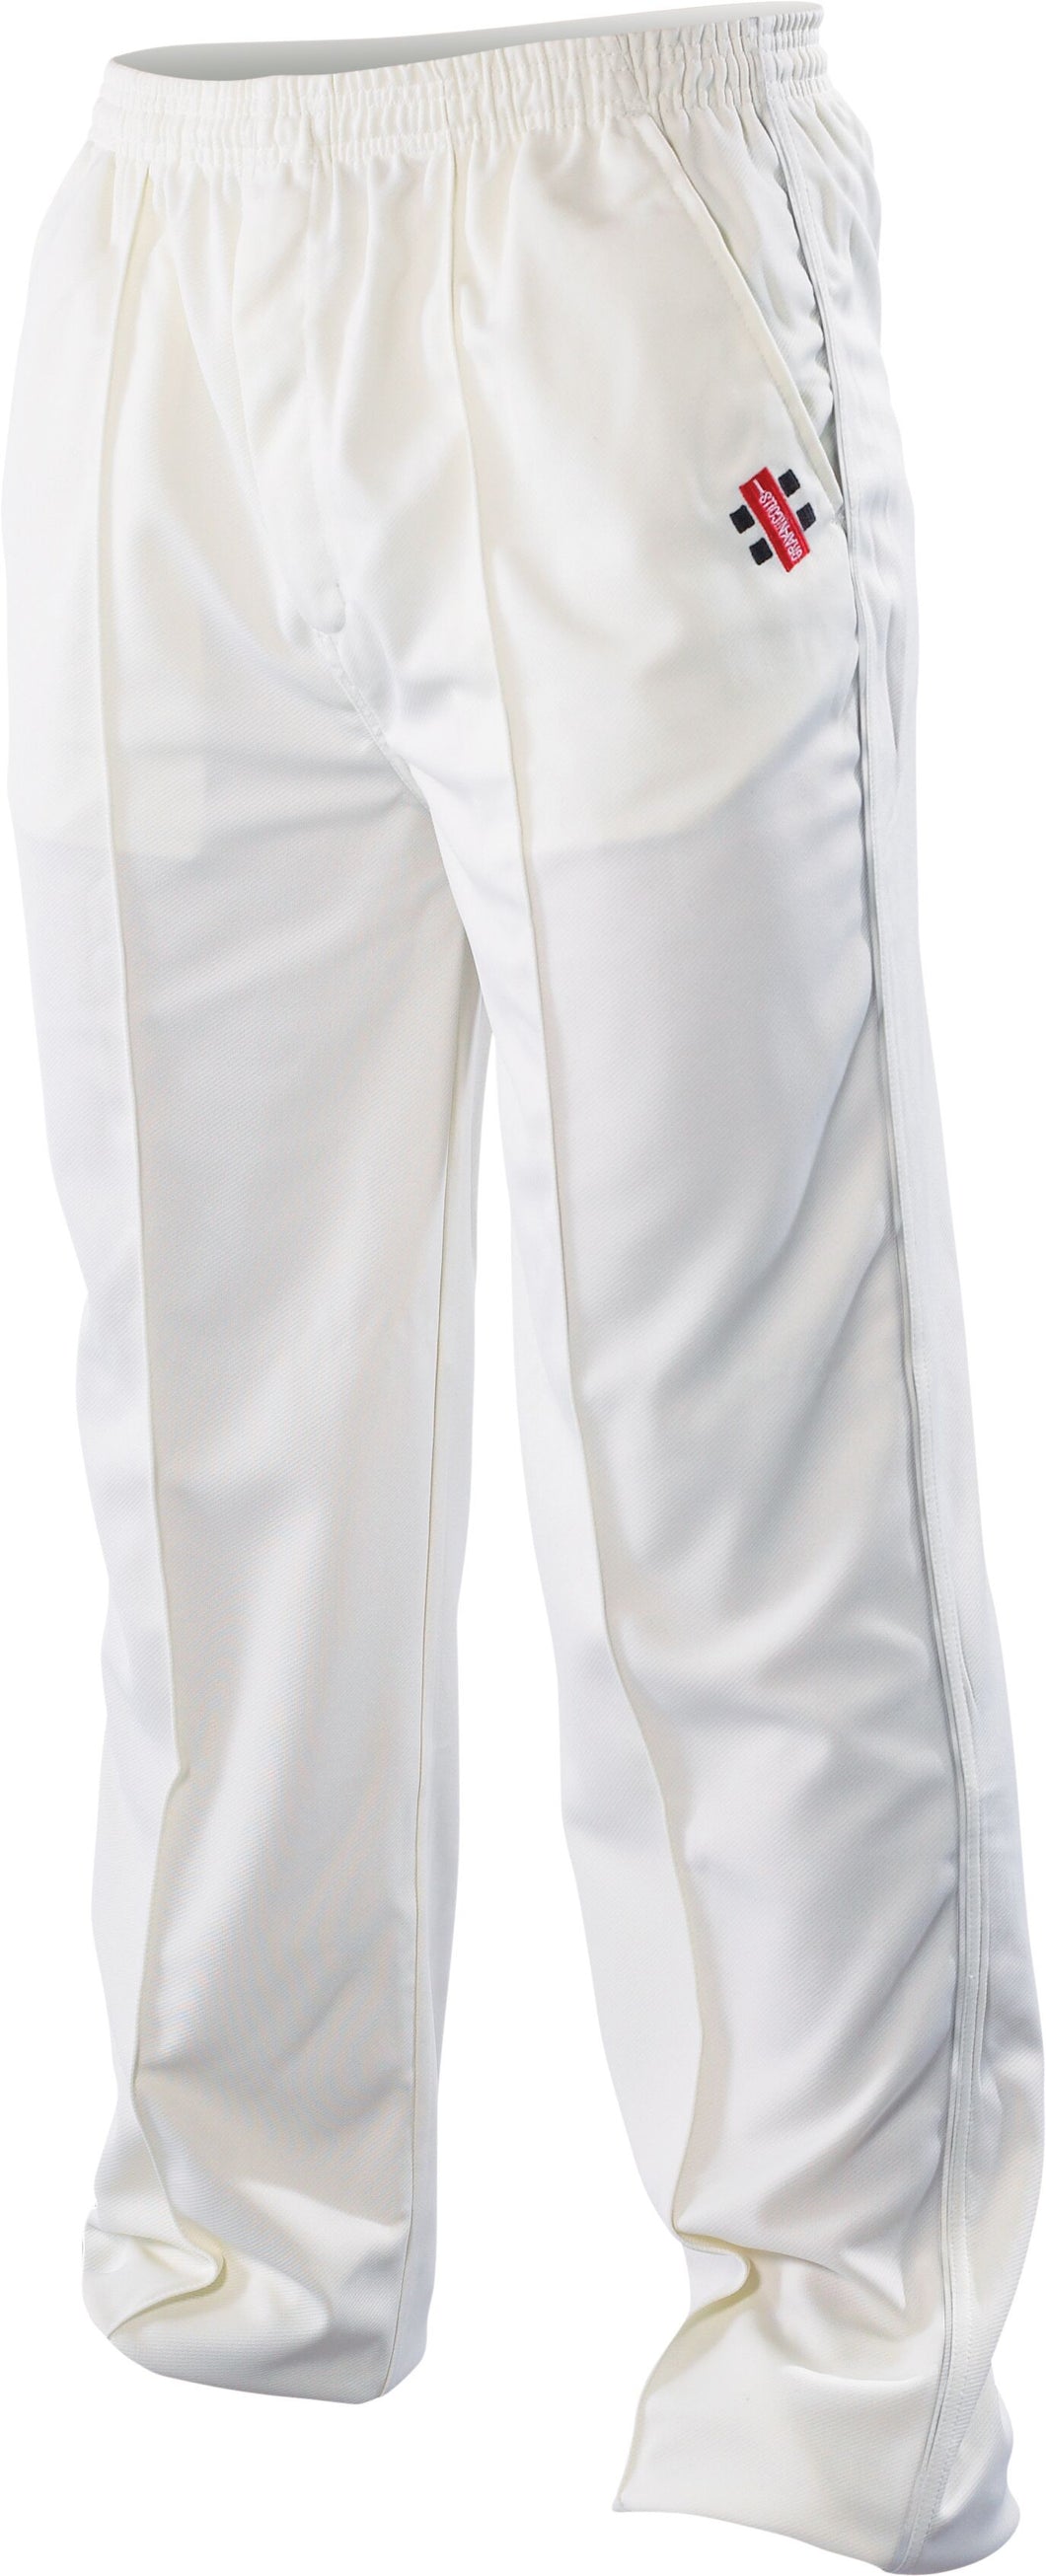 GRAY NICOLLS Super Ivory Cricket Pant/ Trouser